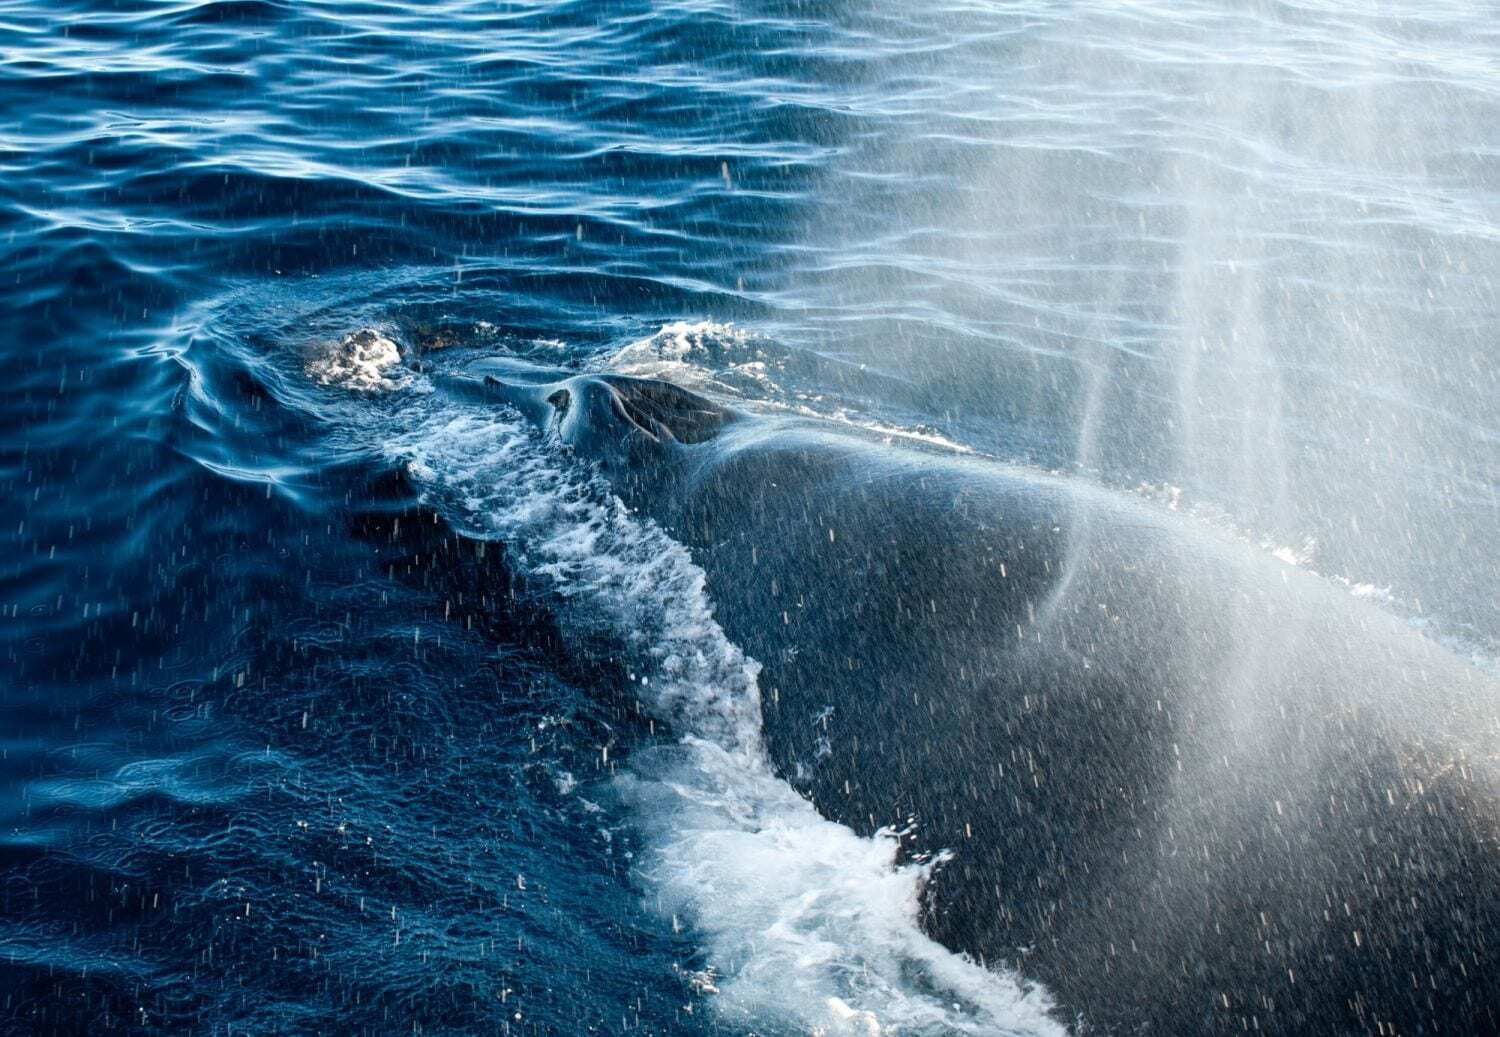 Humpbackwhale releasing air